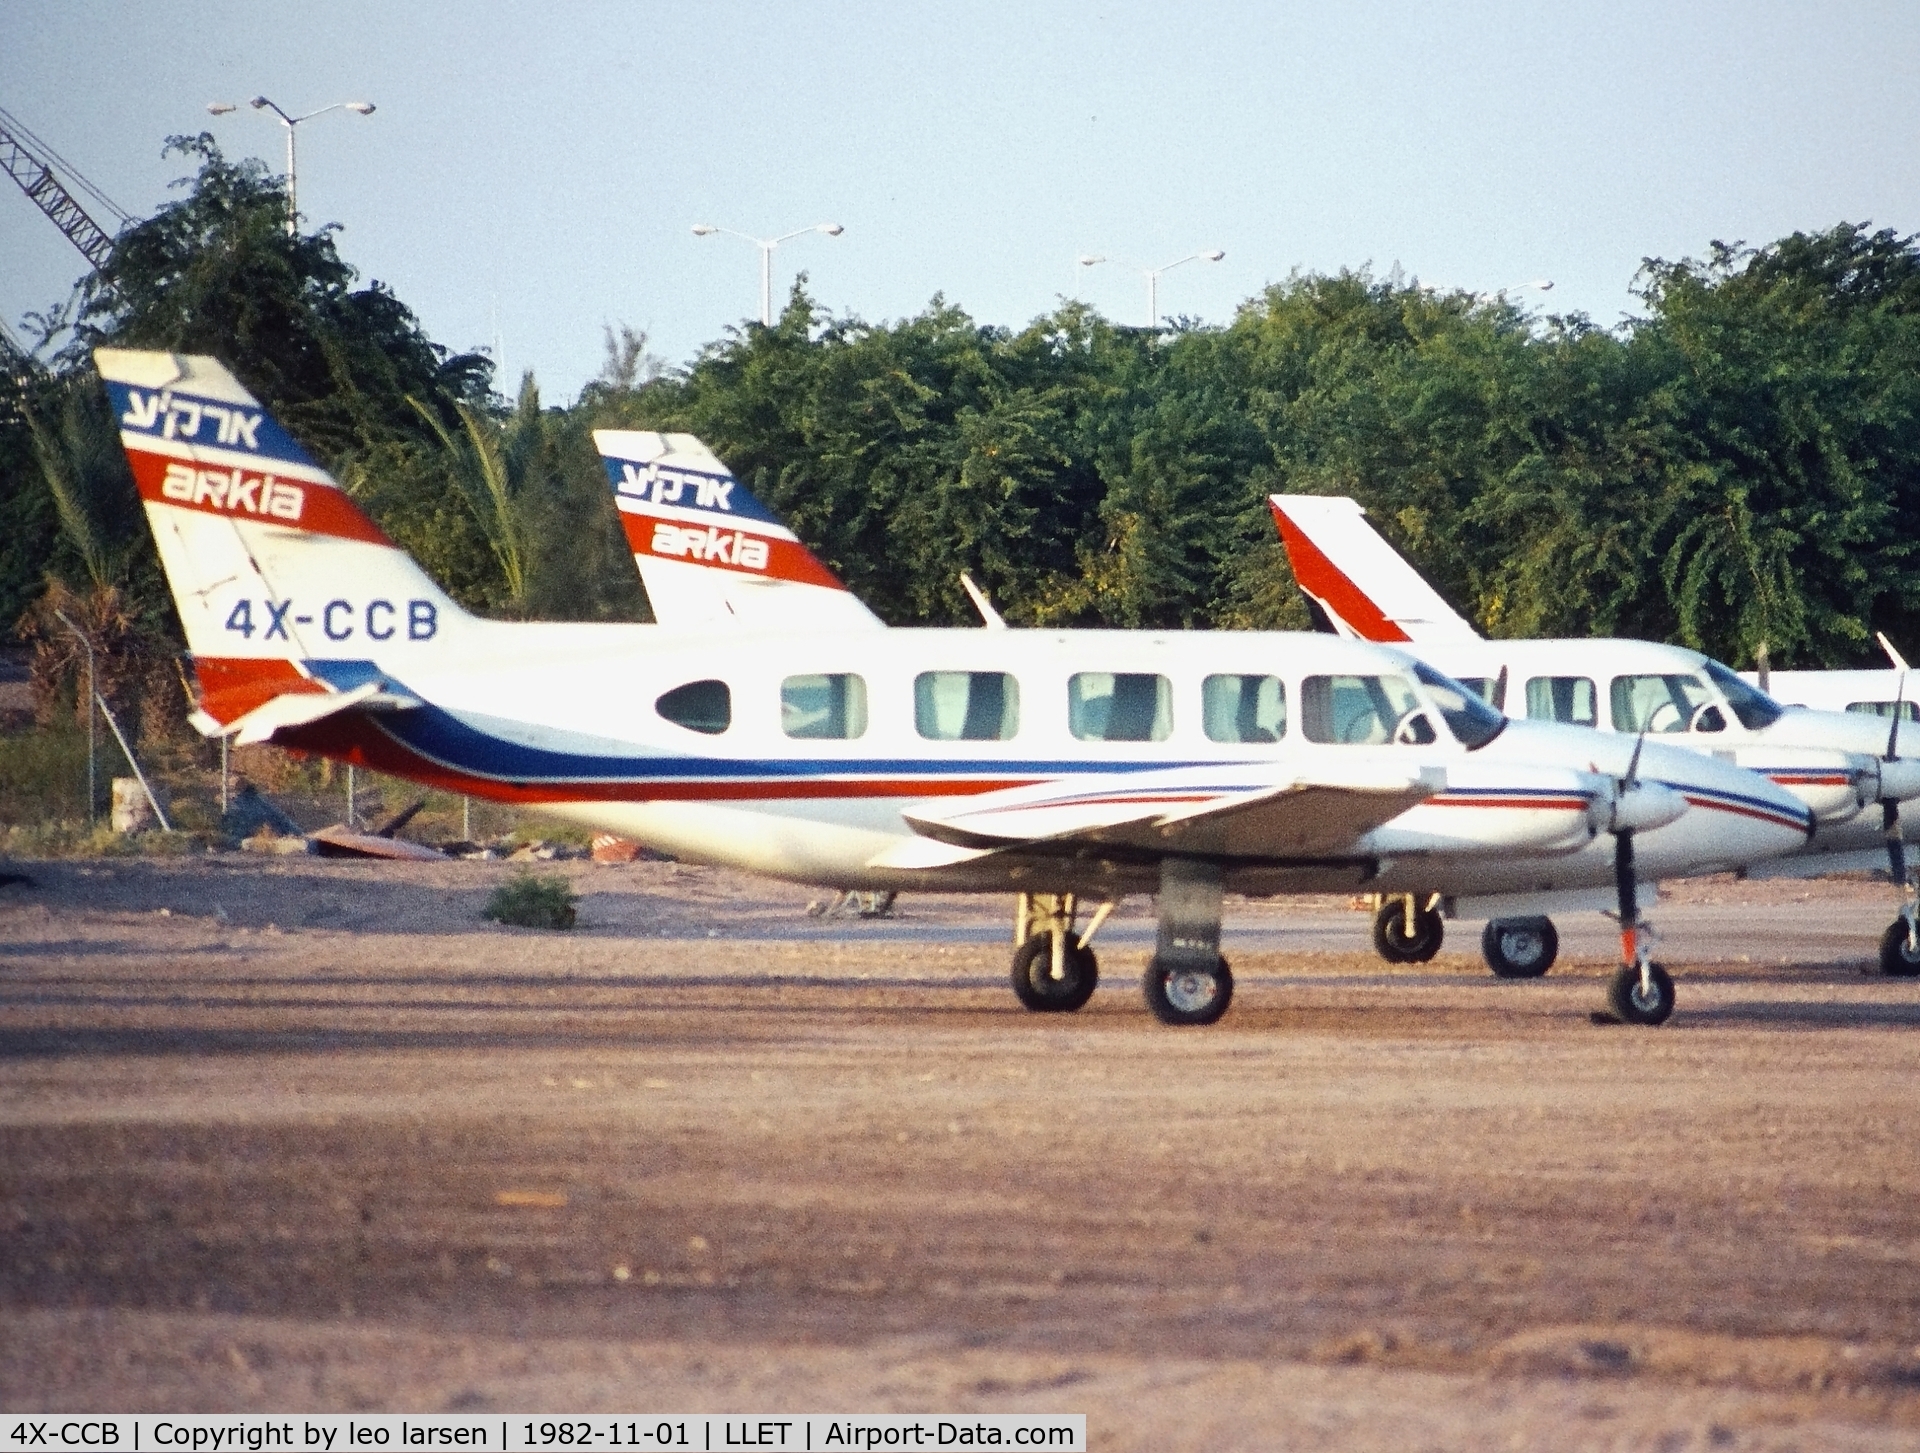 4X-CCB, 1976 Piper PA-31-350 Navajo Chieftain Chieftain C/N 31-7652062, Ilat 1.11.1982